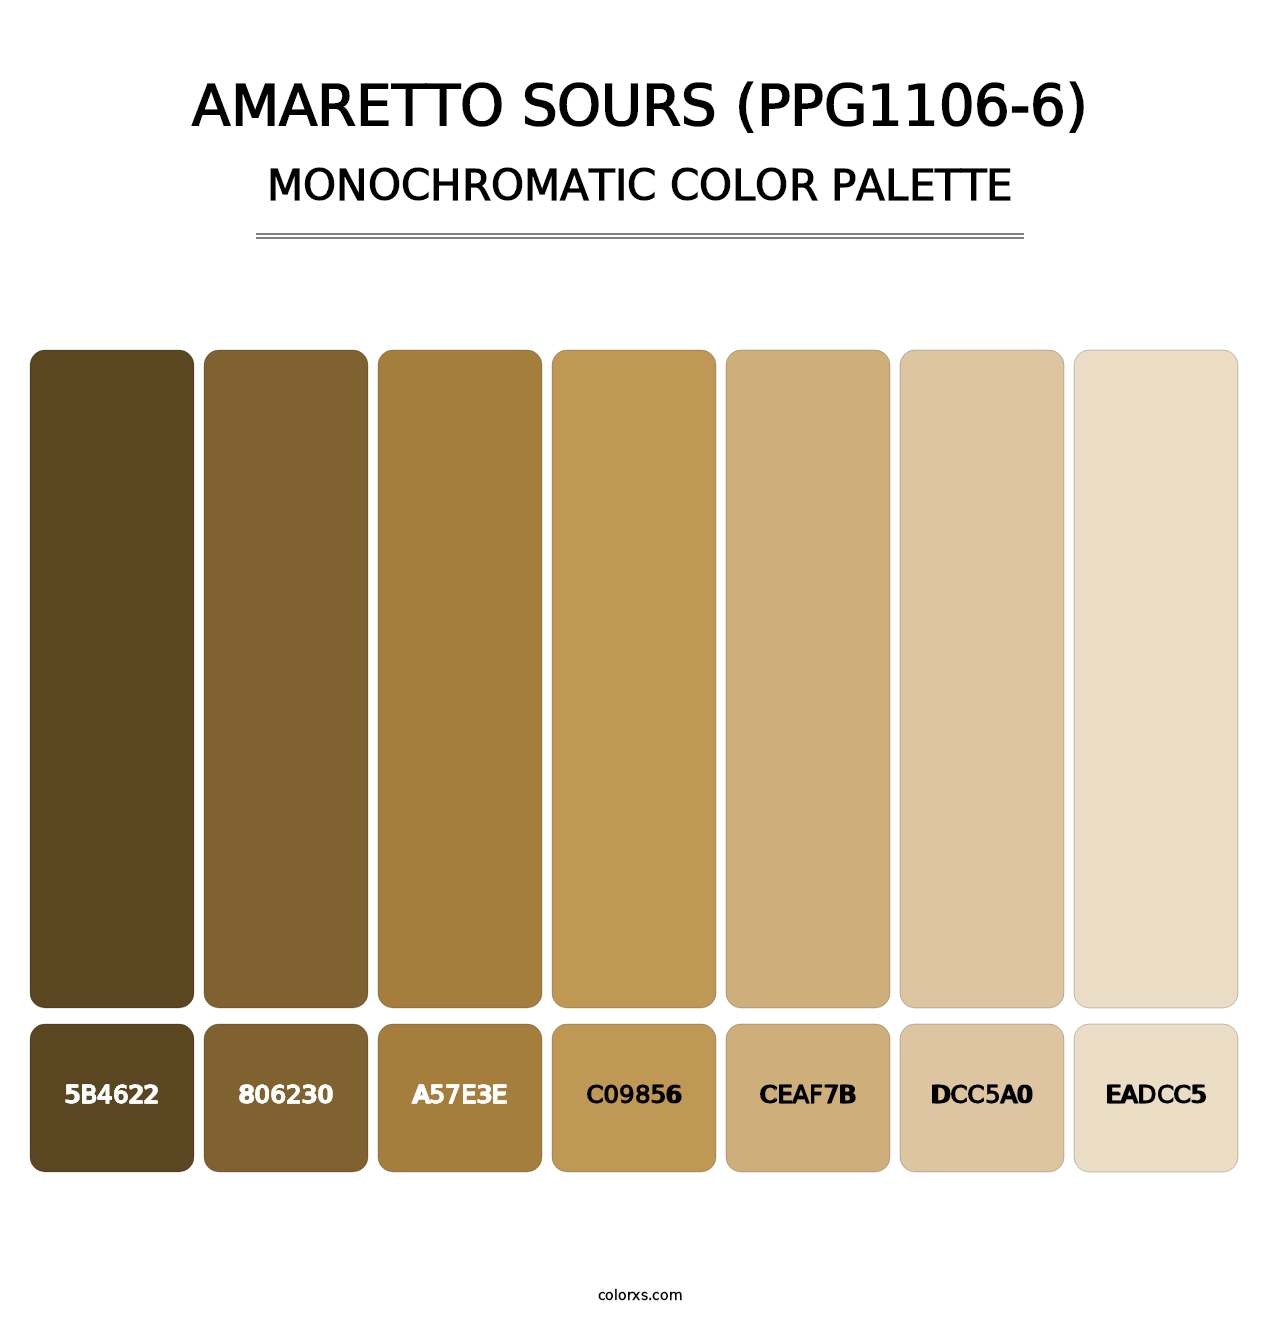 Amaretto Sours (PPG1106-6) - Monochromatic Color Palette